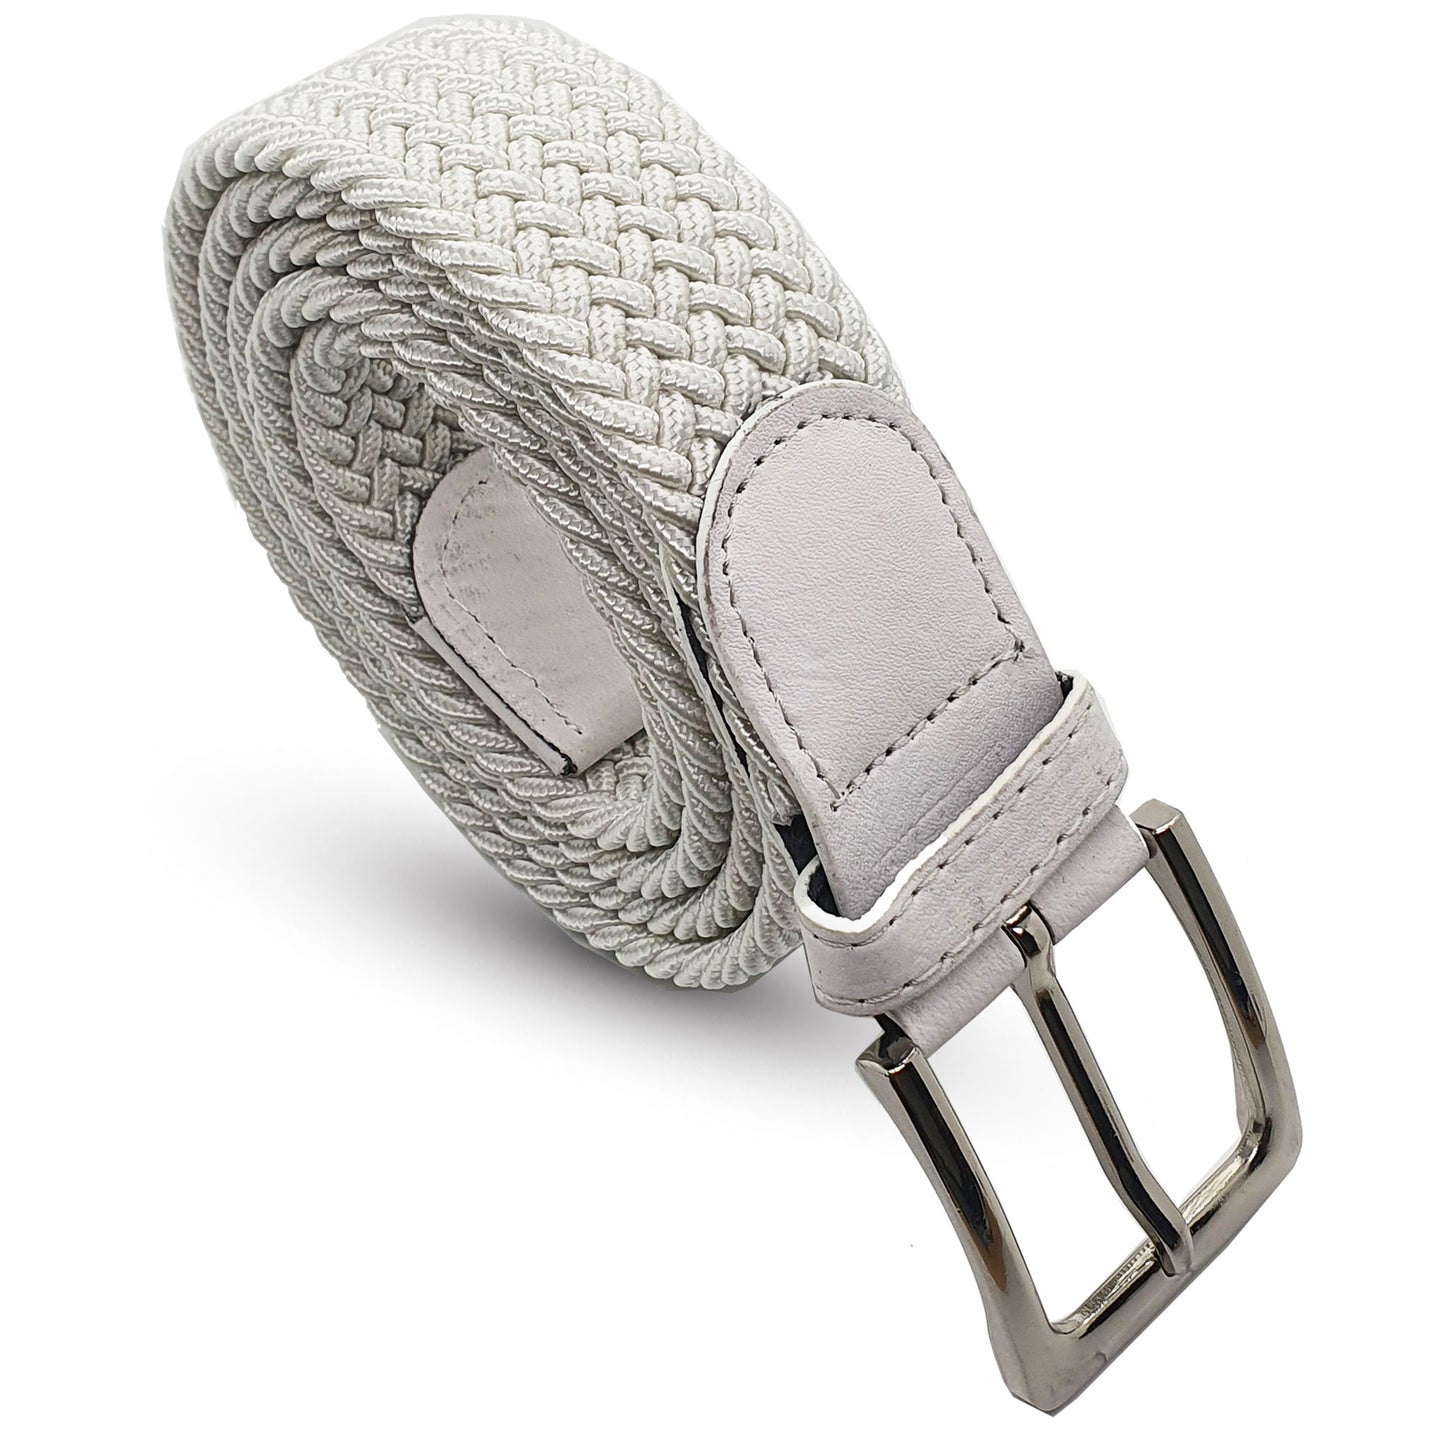 Elastic Belt - Braided Belt - Belt - Stretch Belt - Braided Belt - Black 105 cm